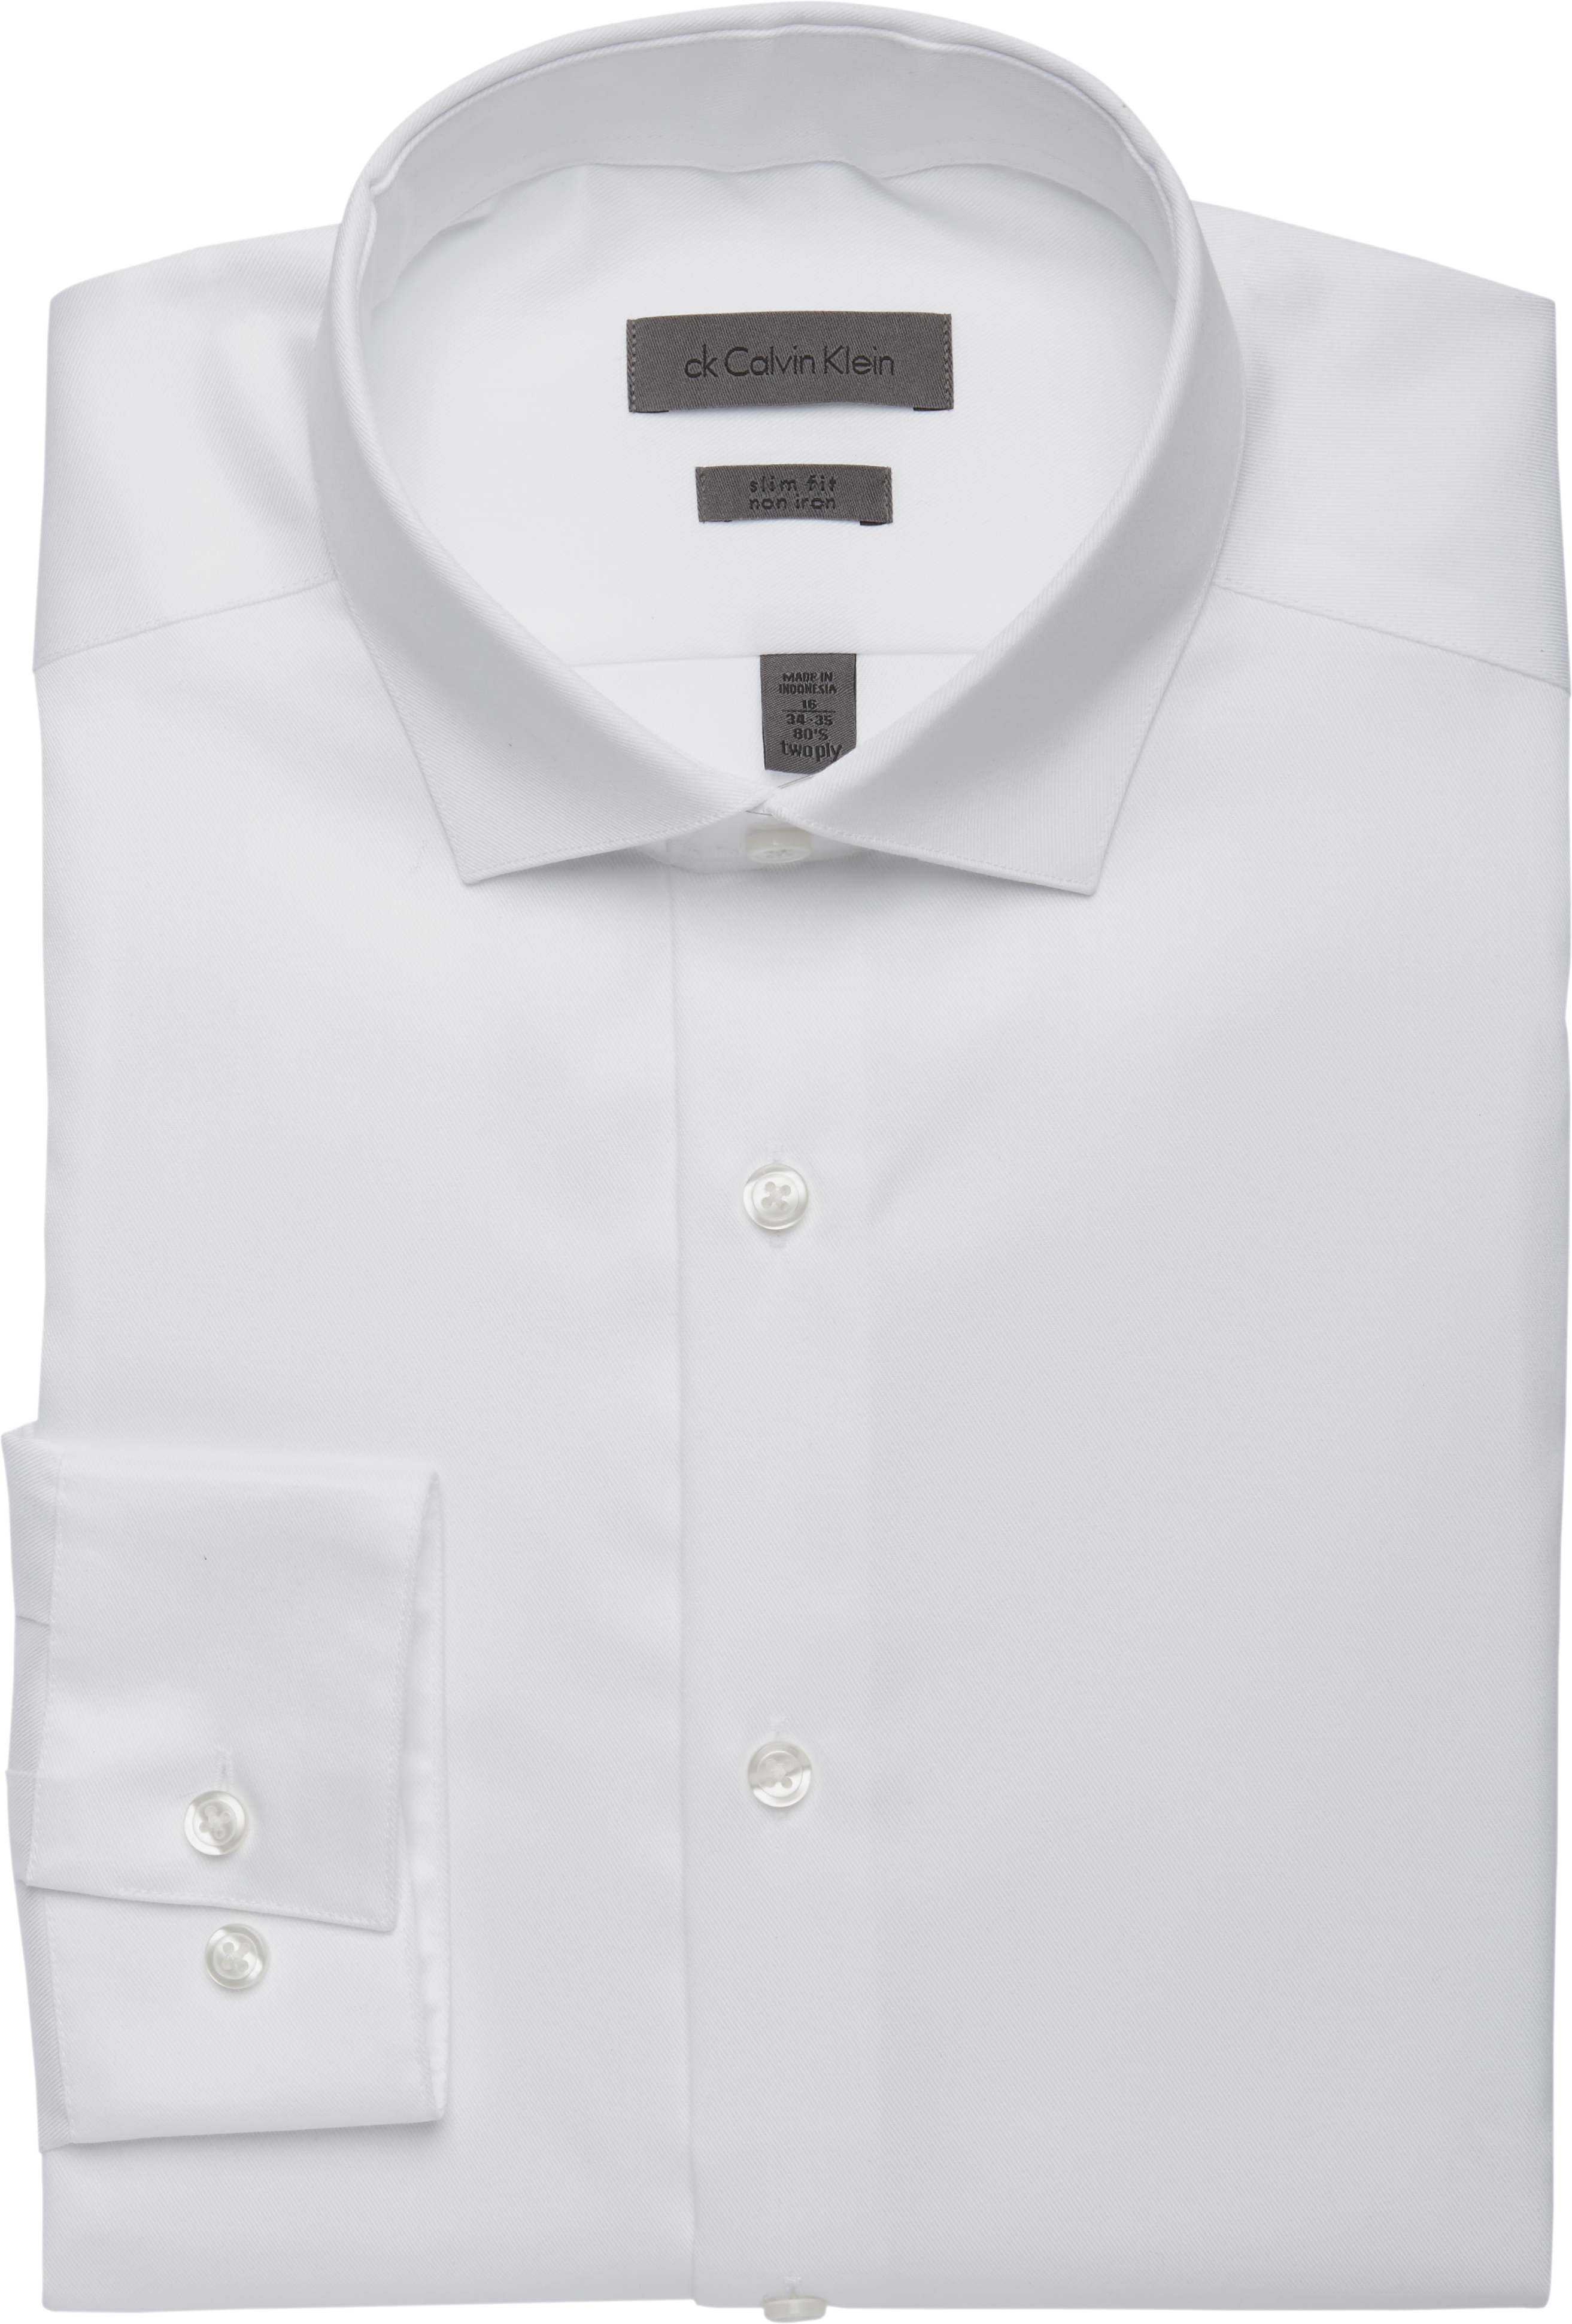 ck white shirt